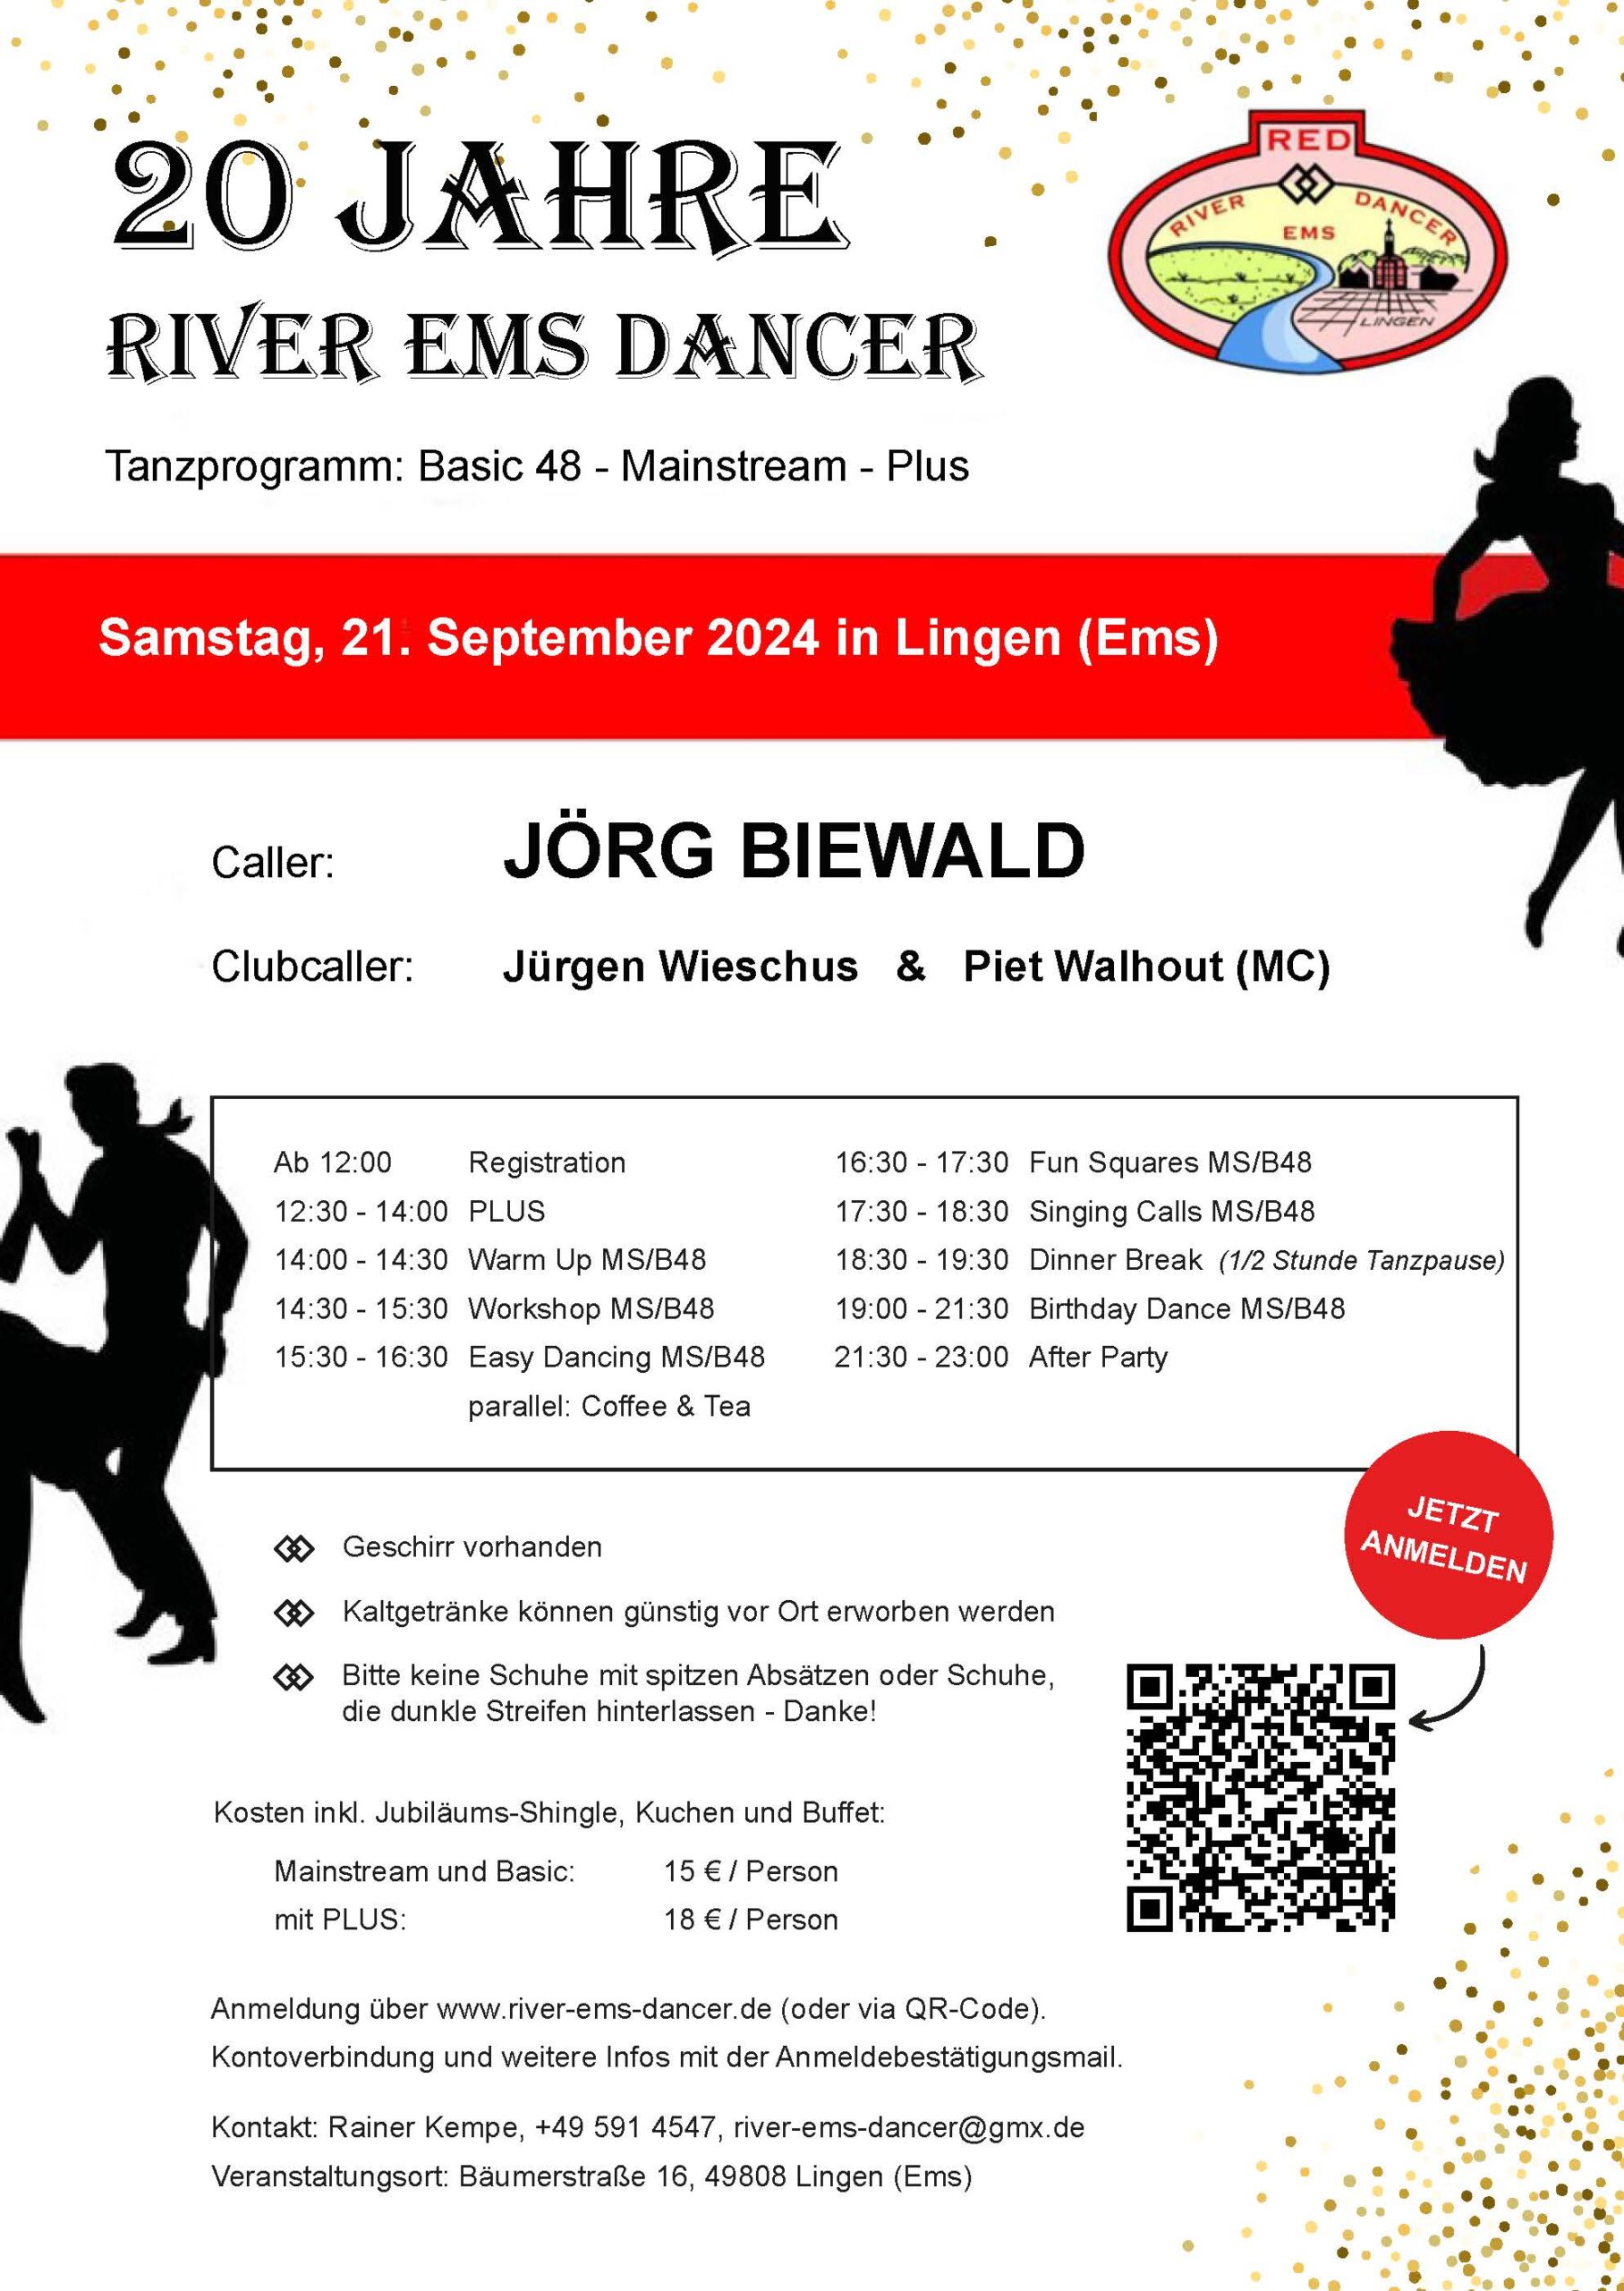 20-Jahre-River-Ems-Dancer